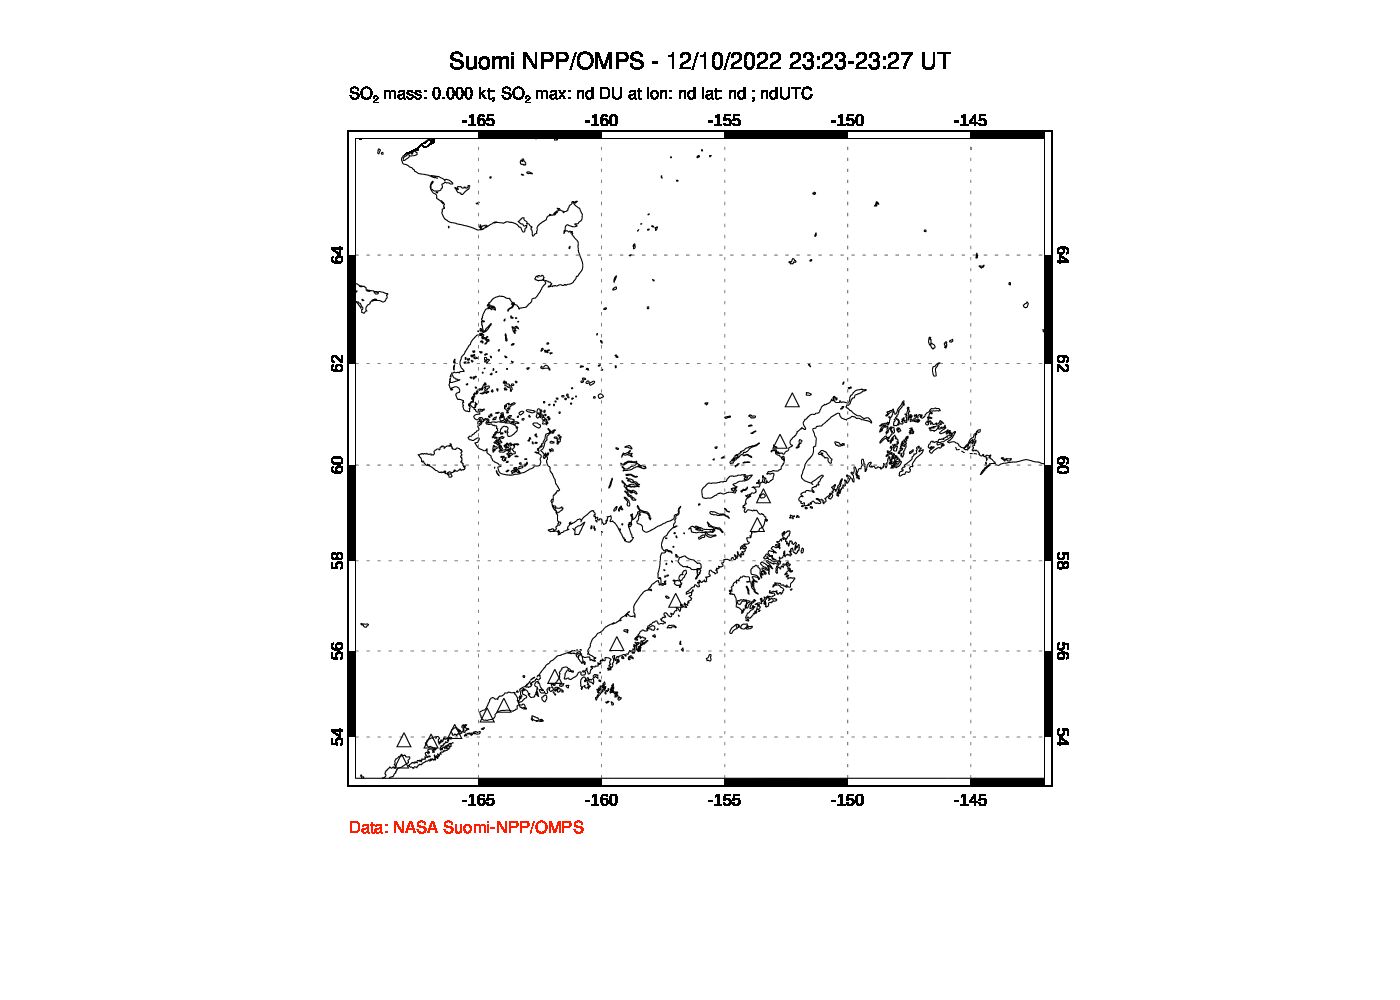 A sulfur dioxide image over Alaska, USA on Dec 10, 2022.